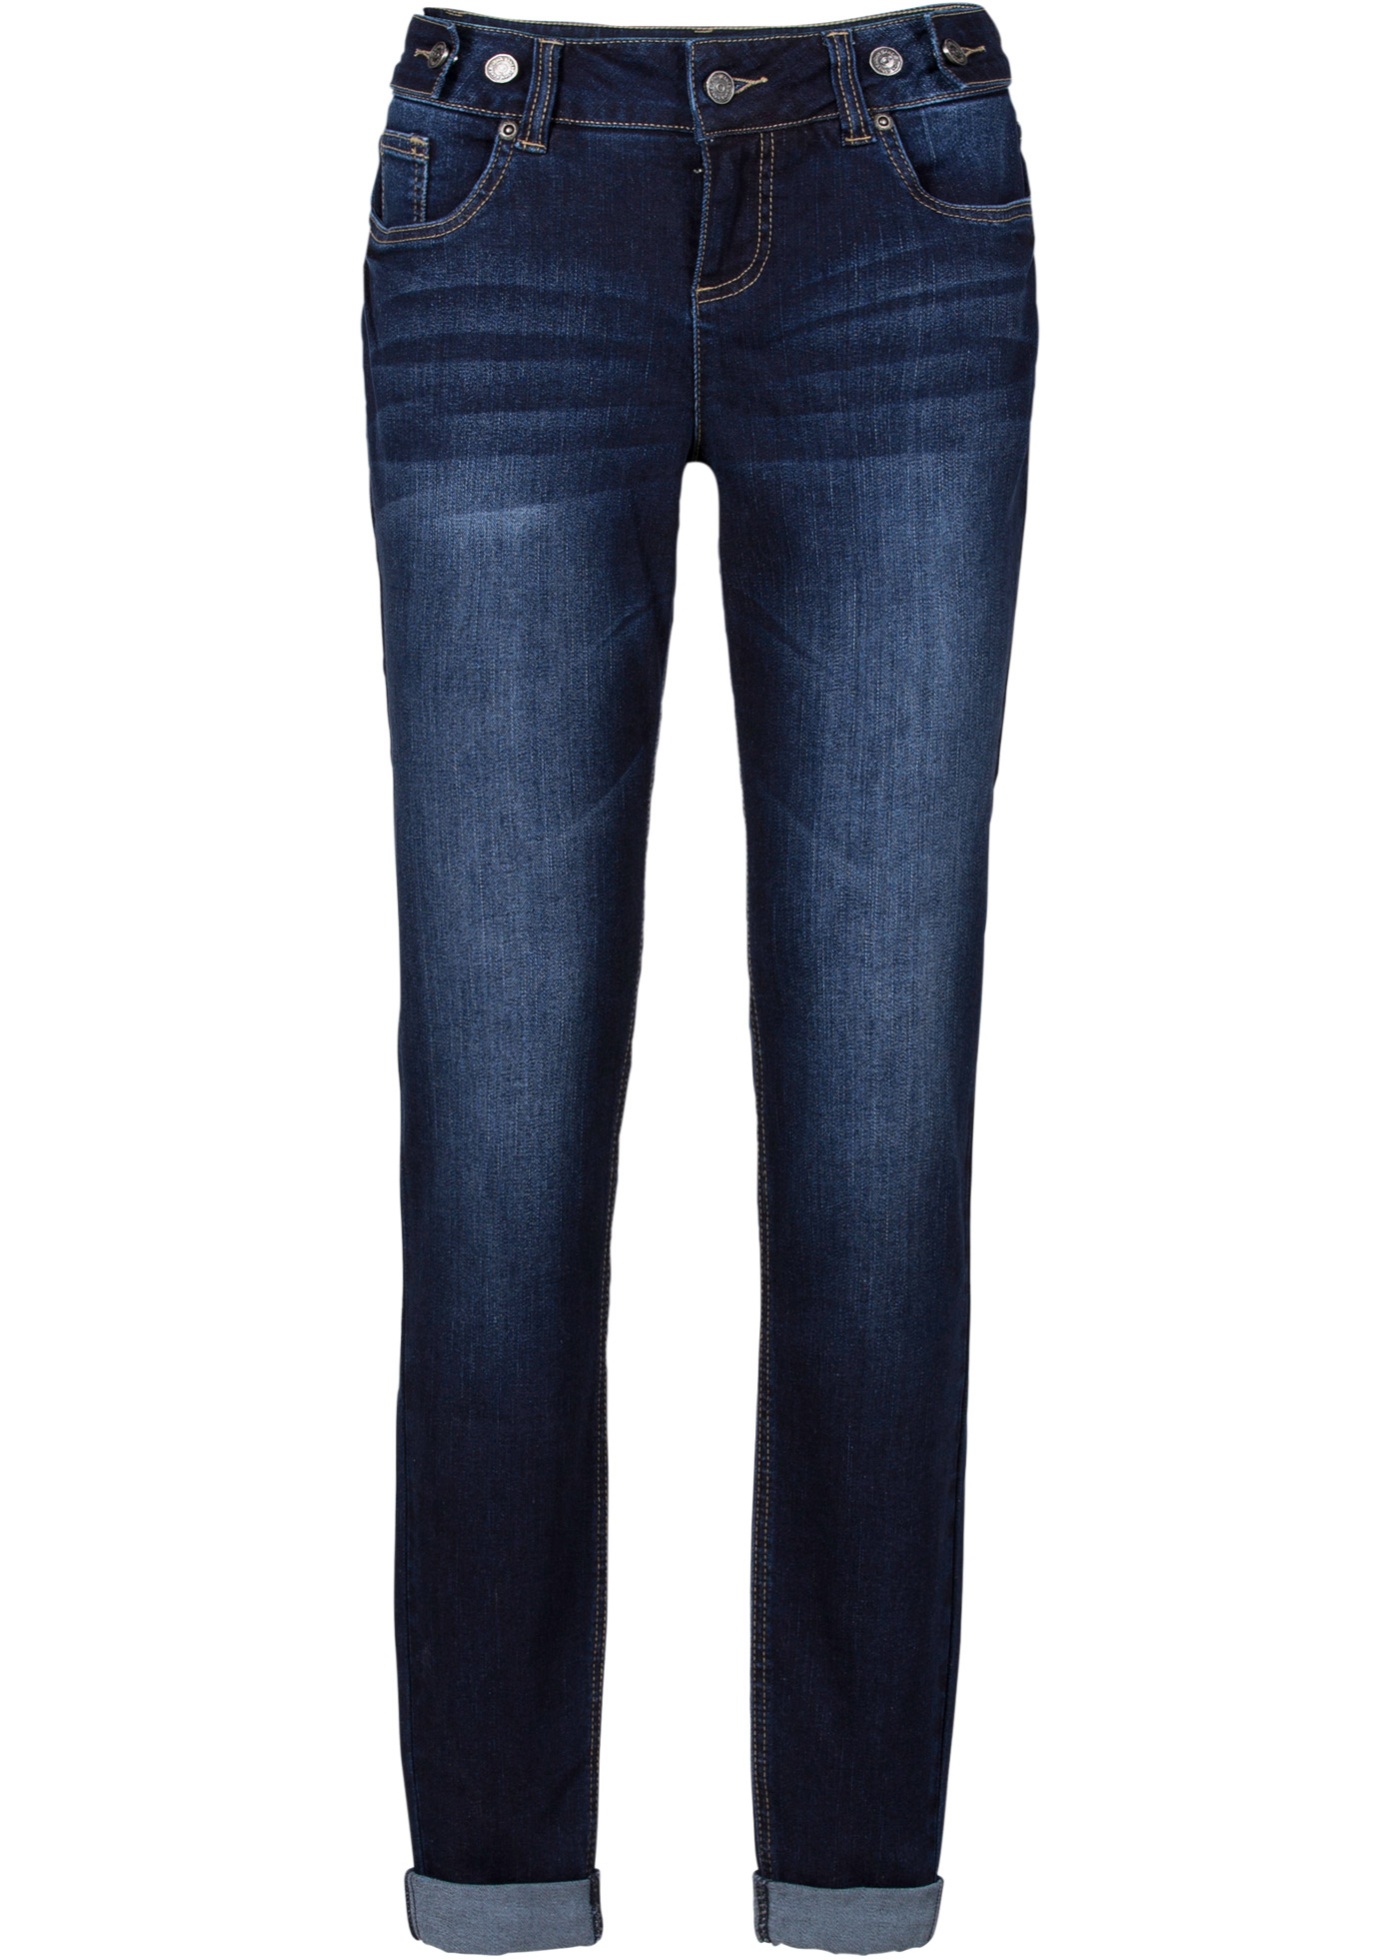 Angesagte Jeans mit Tapered Leg (94012395) in dunkelblau used